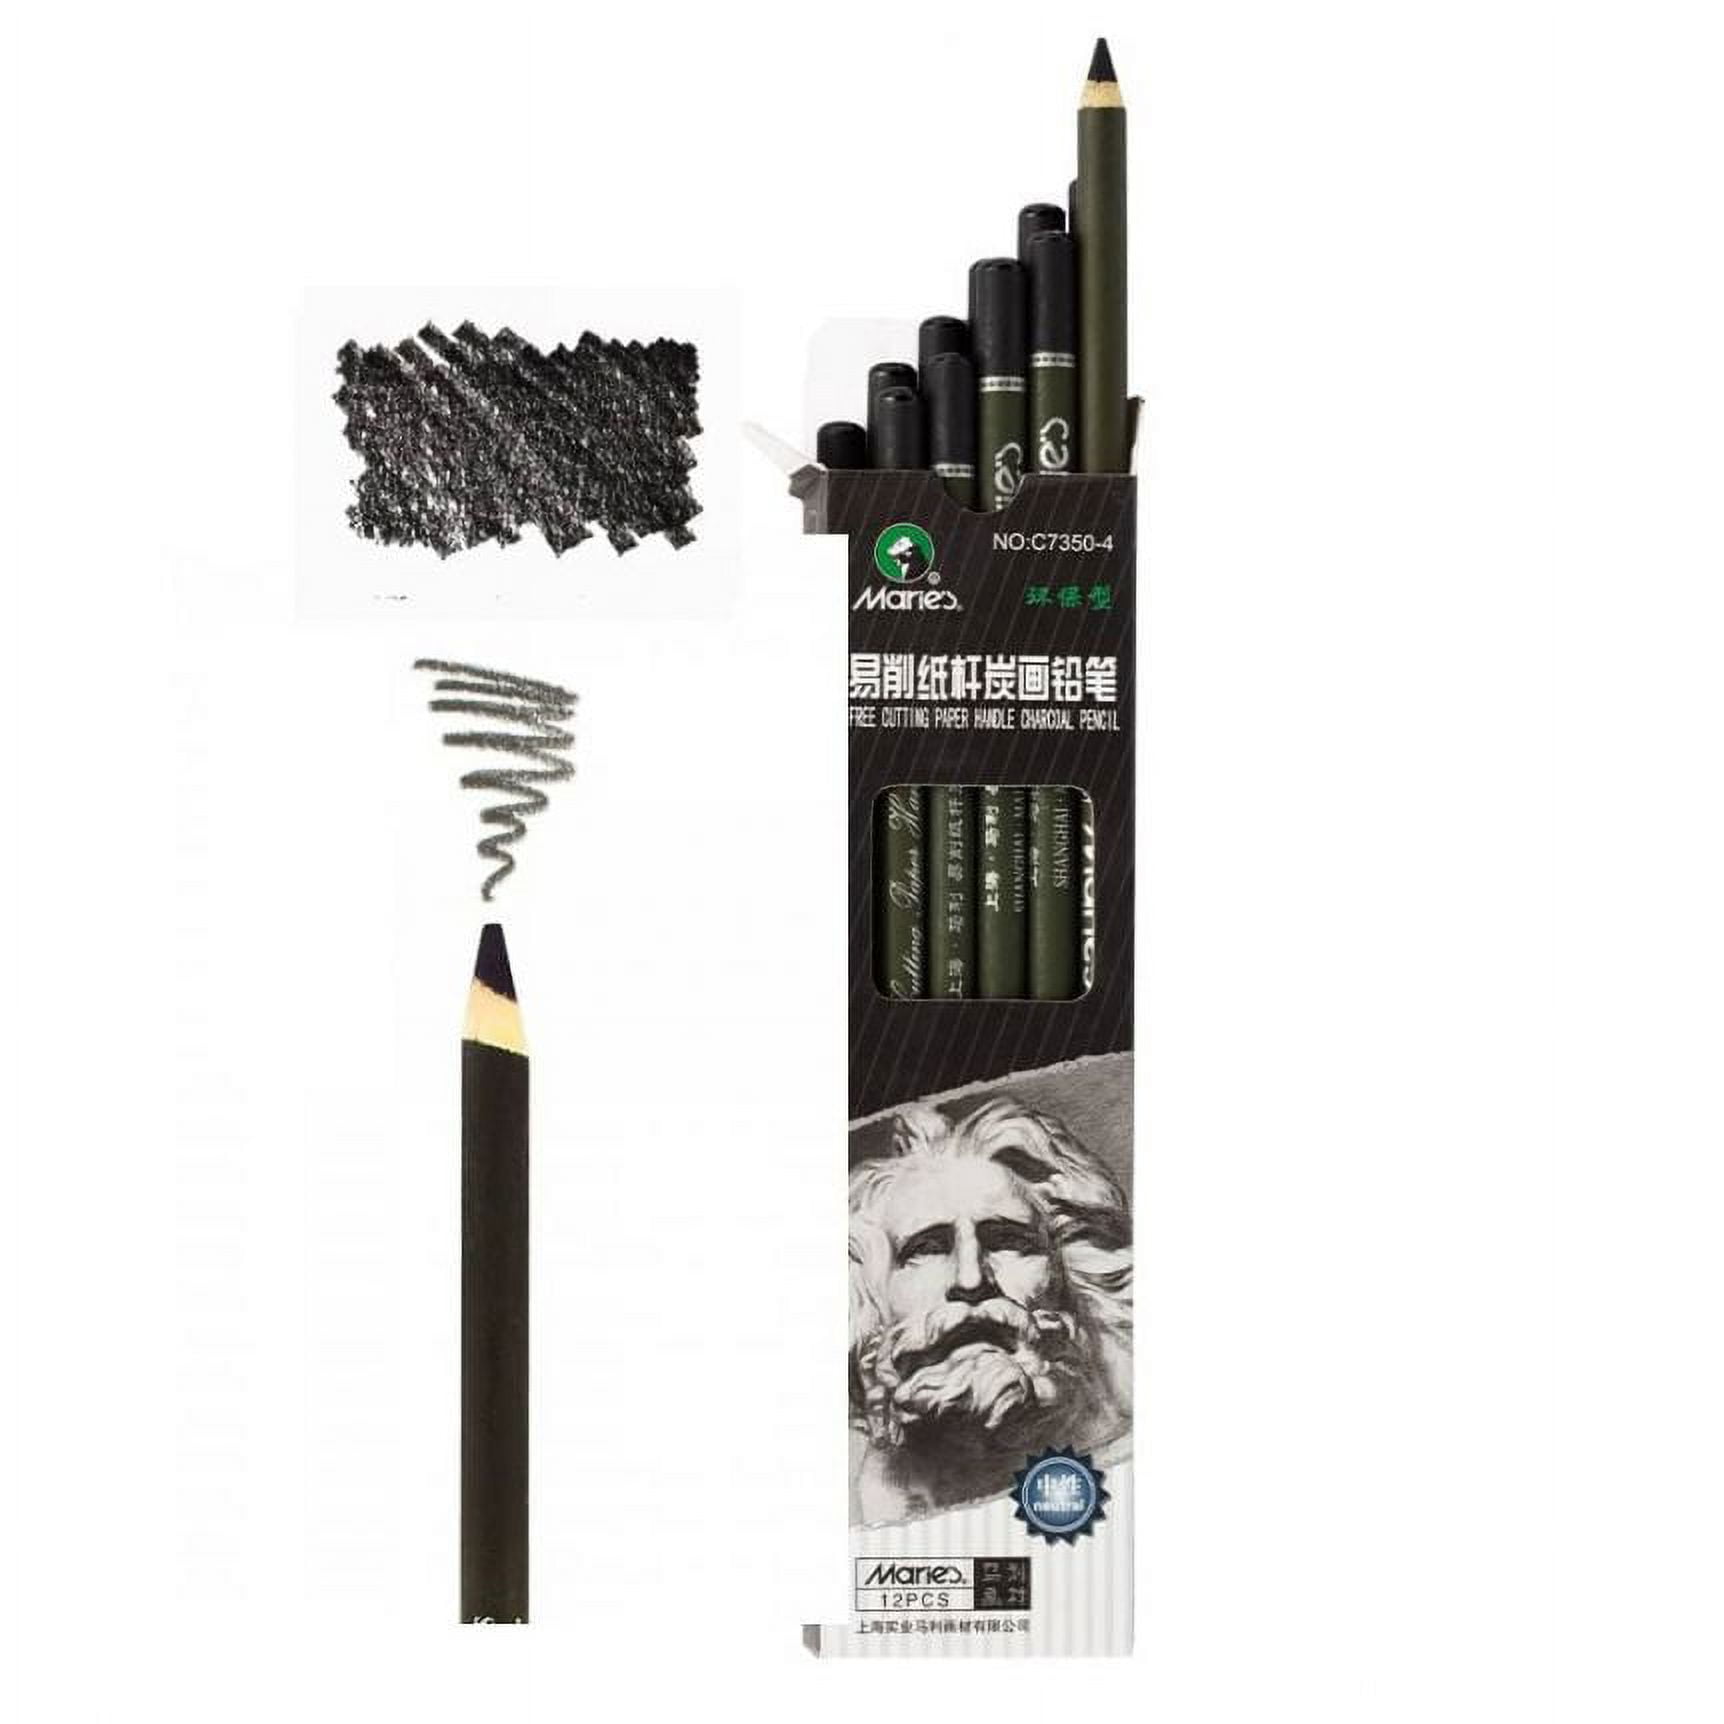 Leda's Dream 72 Piece Art Set with 60 Professional Drawing Pencils (Colored Charcoal Watercolor Metallic Black) Premium Sketchbook Mini-Pencil